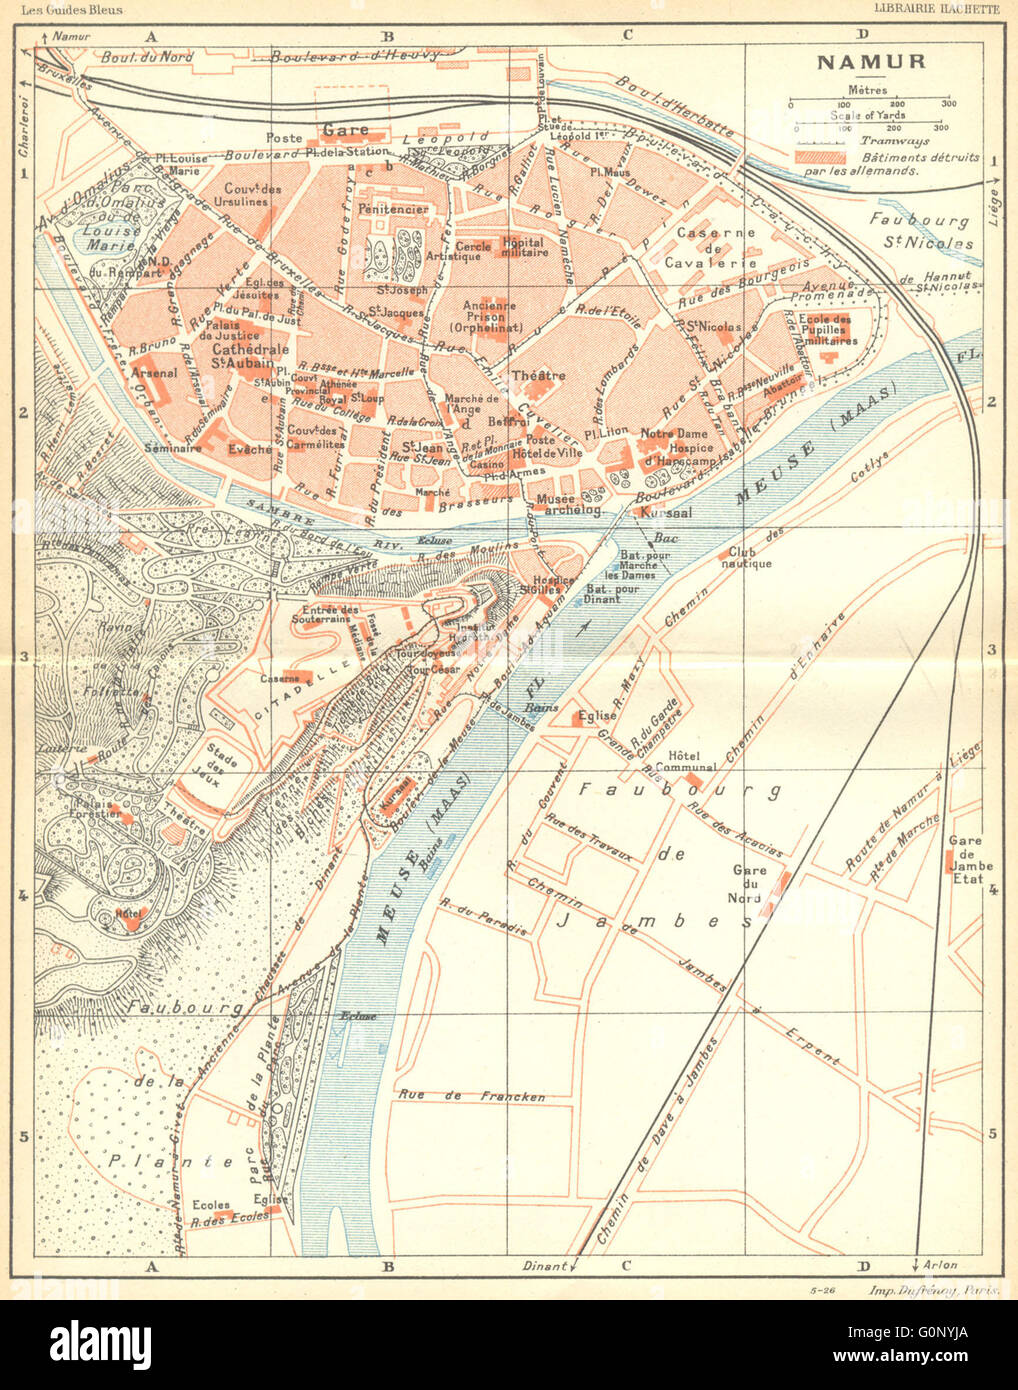 BELGIUM: Namur. Town city ville plan carte map, 1924 Stock Photo